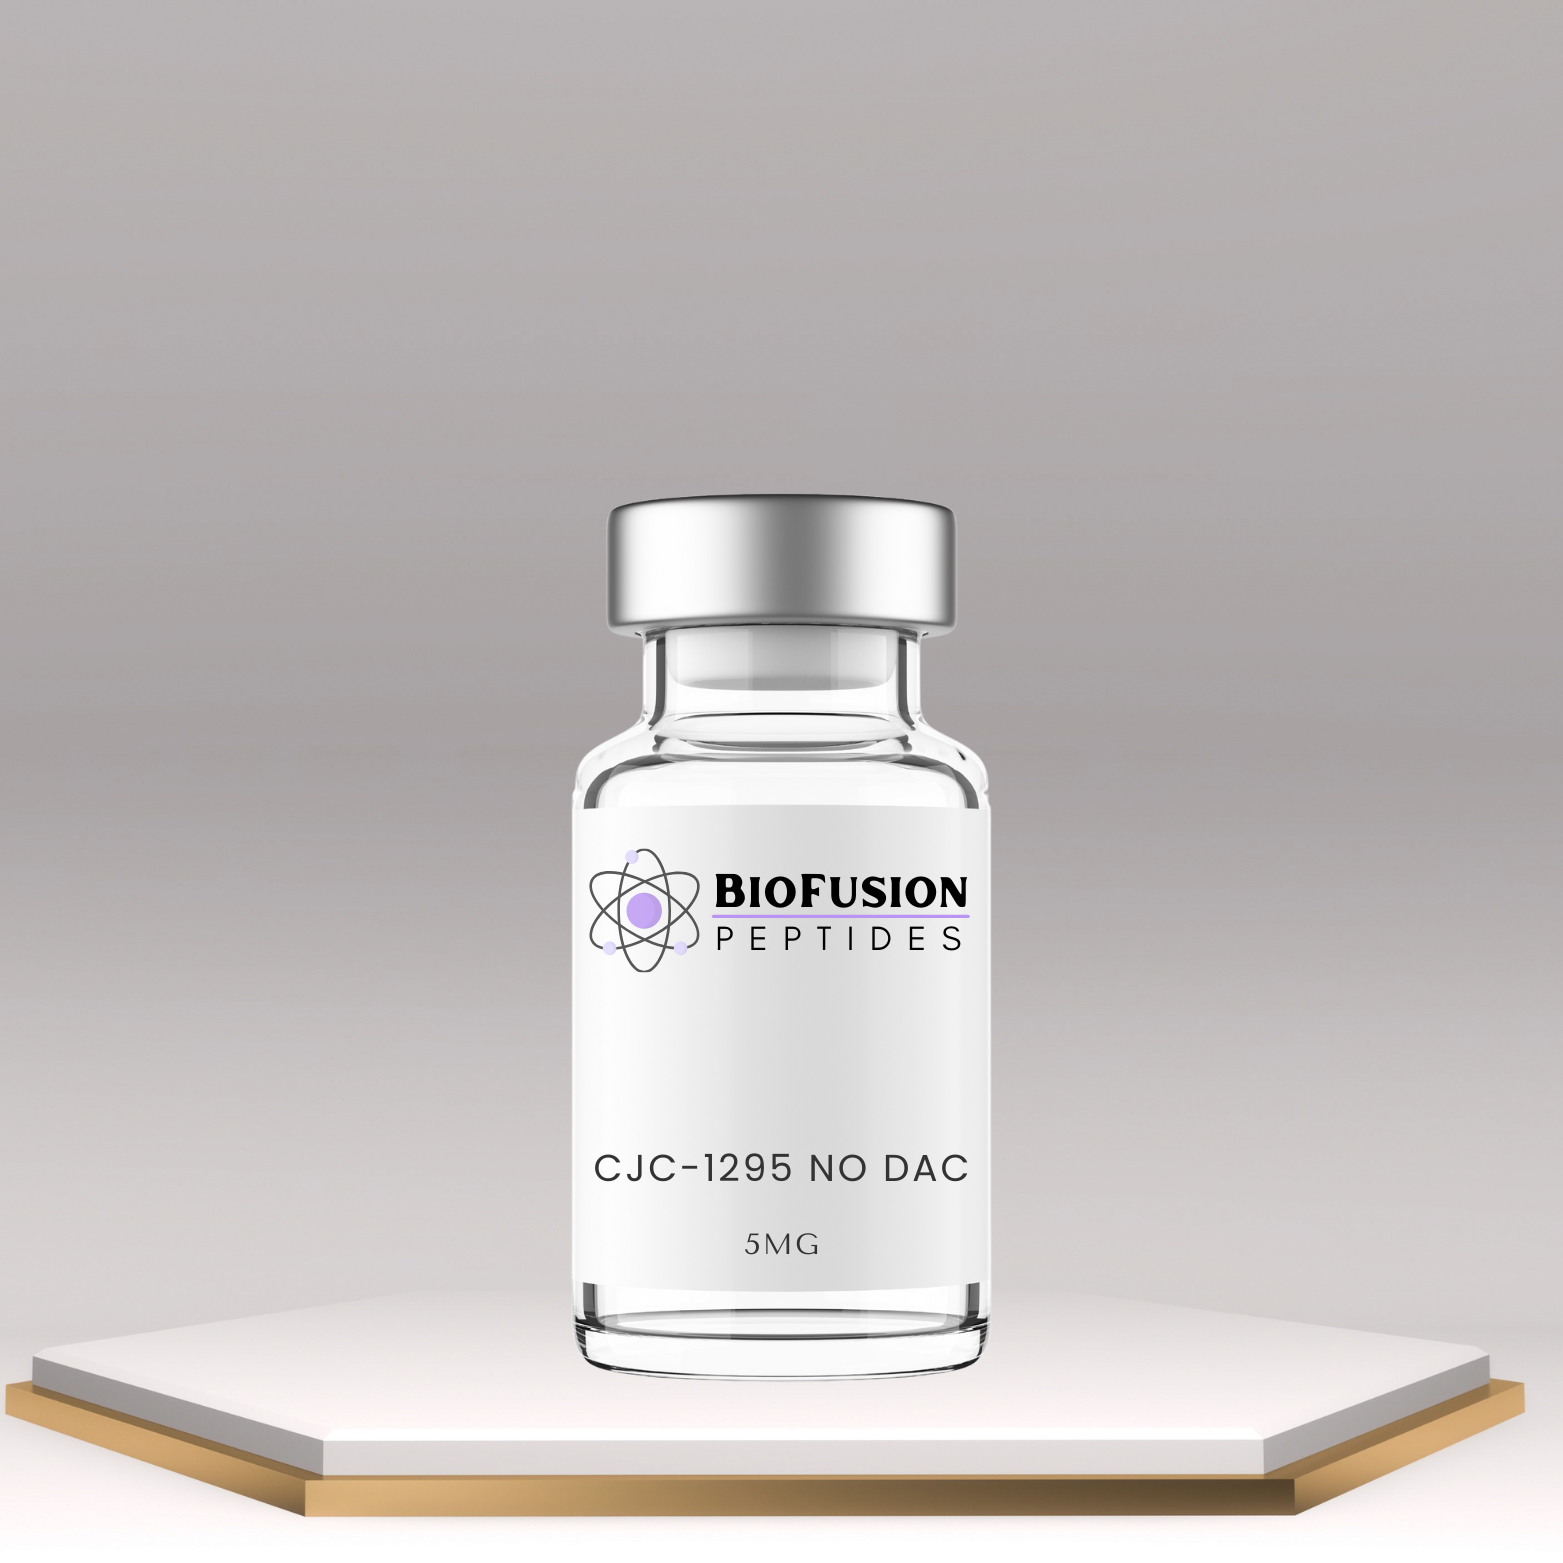 BioFusion Peptides CJC-1295 no DAC 5MG vial